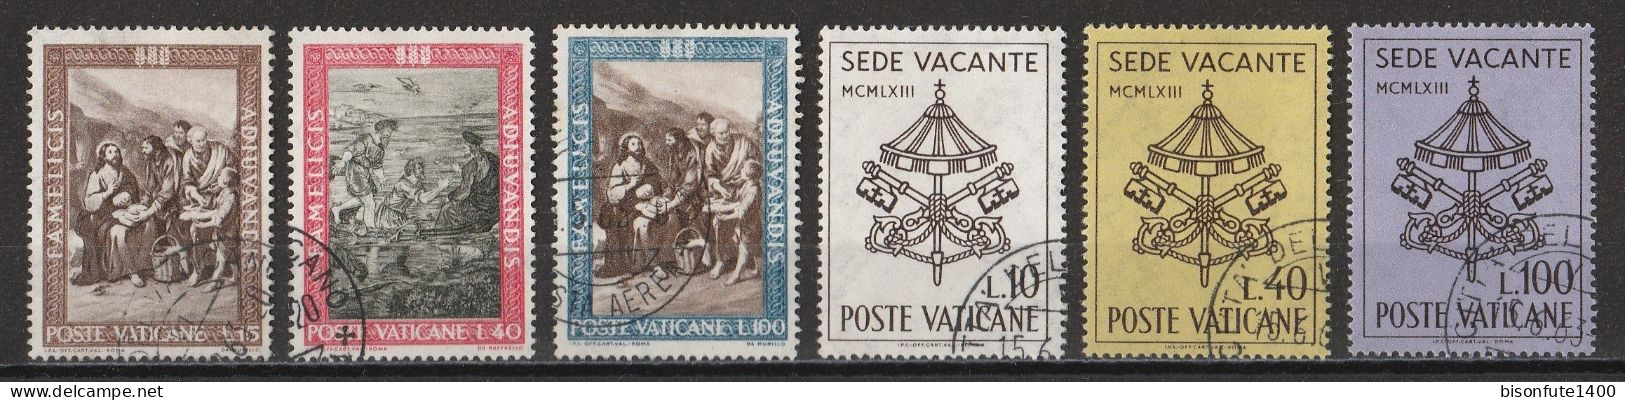 Vatican 1963 : Timbres Yvert & Tellier N° 374 - 375 - 376 - 380 - 381 - 382 - 383 - 384 - 385 - 386 - 387 - 388 -....... - Gebruikt